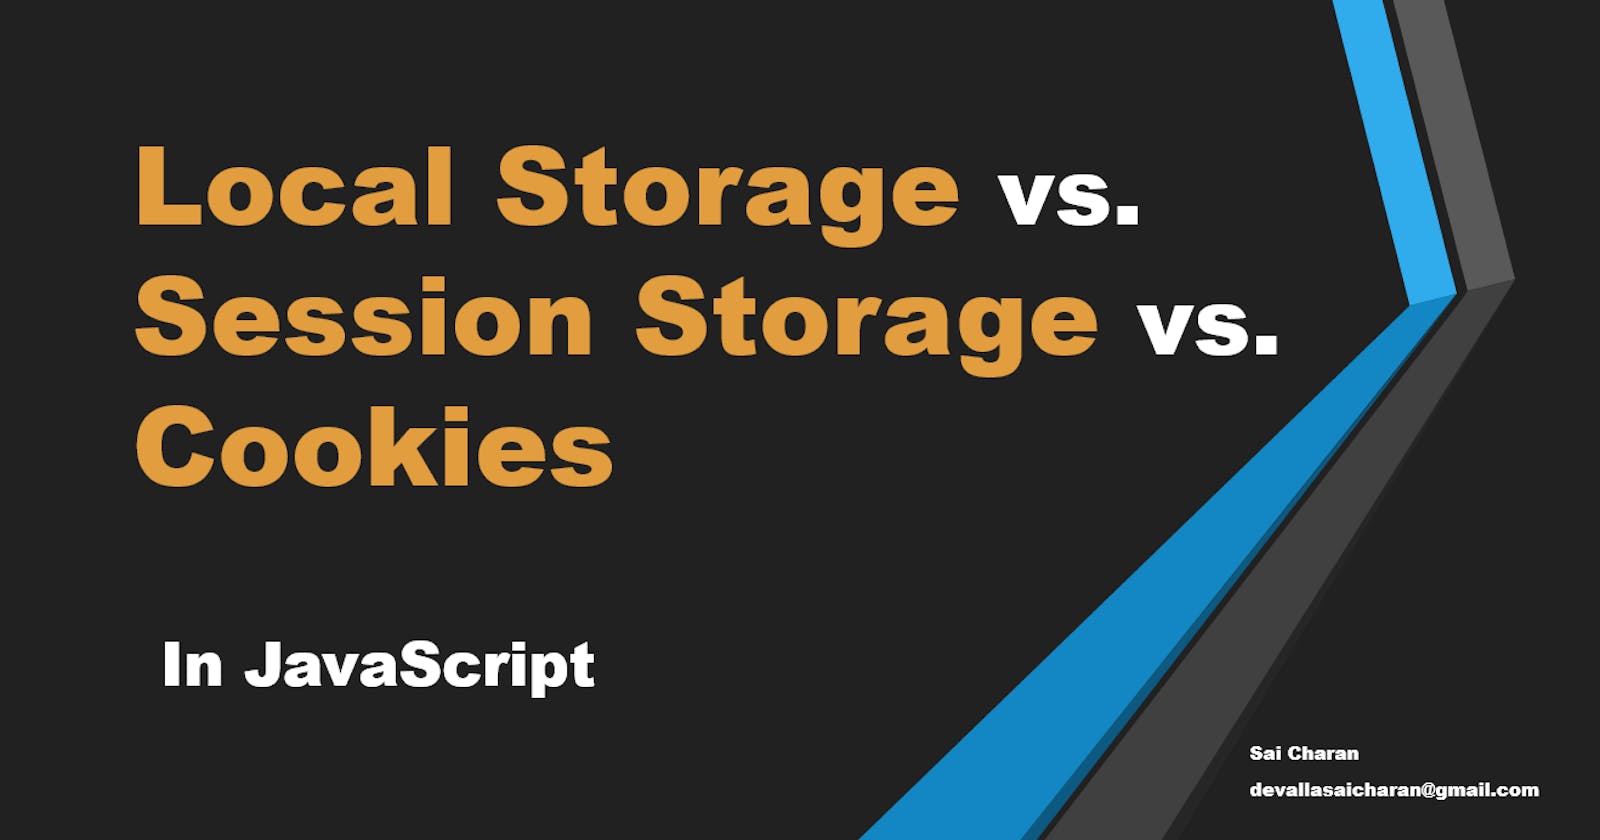 Local Storage vs Session Storage vs Cookies in JavaScript